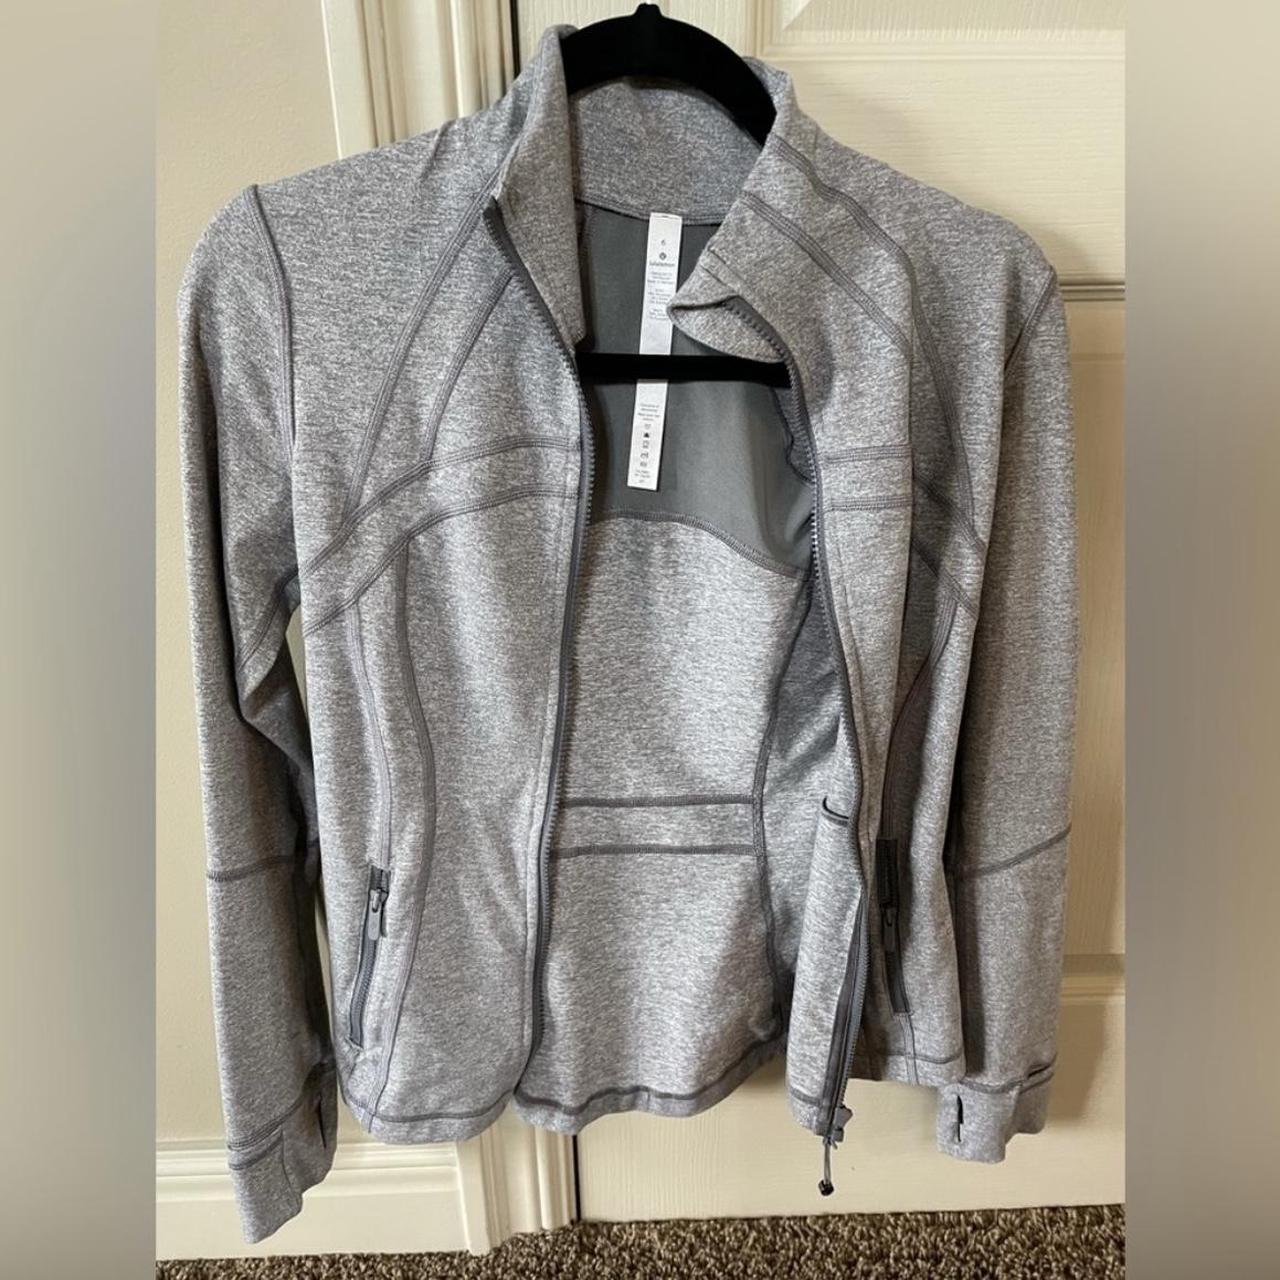 Grey lululemon jacket In great condition just minor - Depop